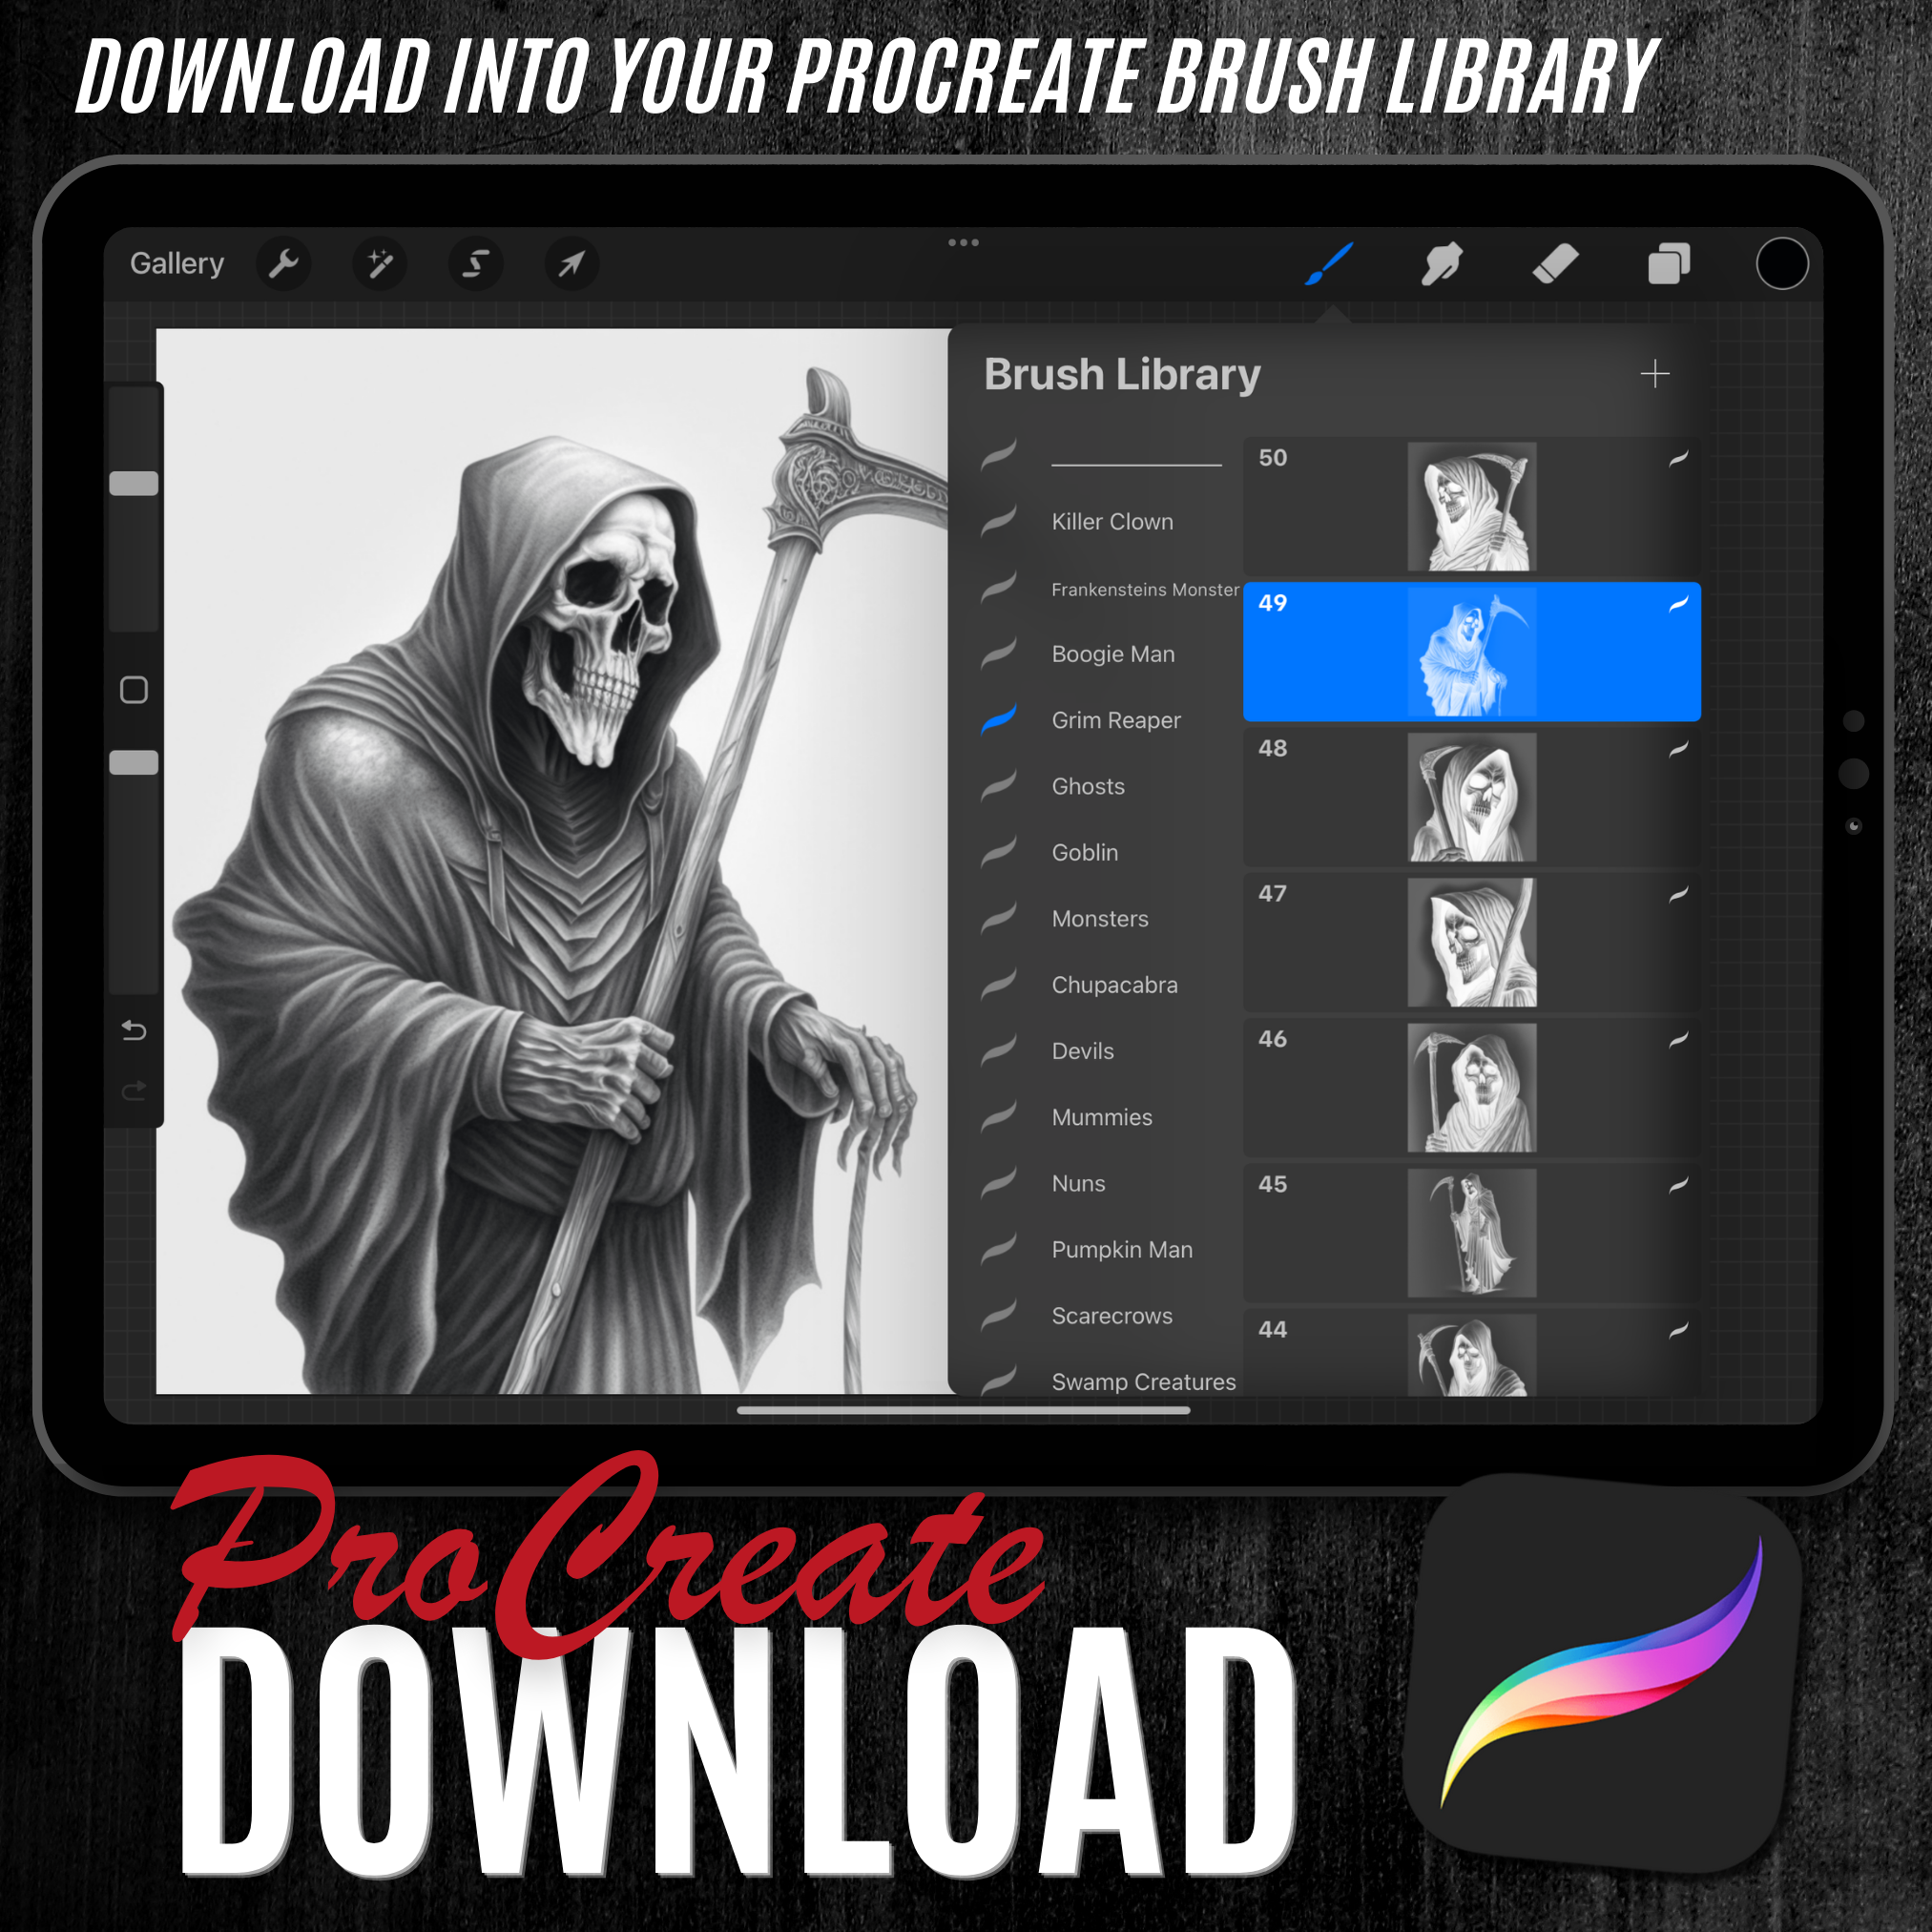 Grim Reapers Digital Horror Design Collection: 50 Procreate & Sketchbook Images